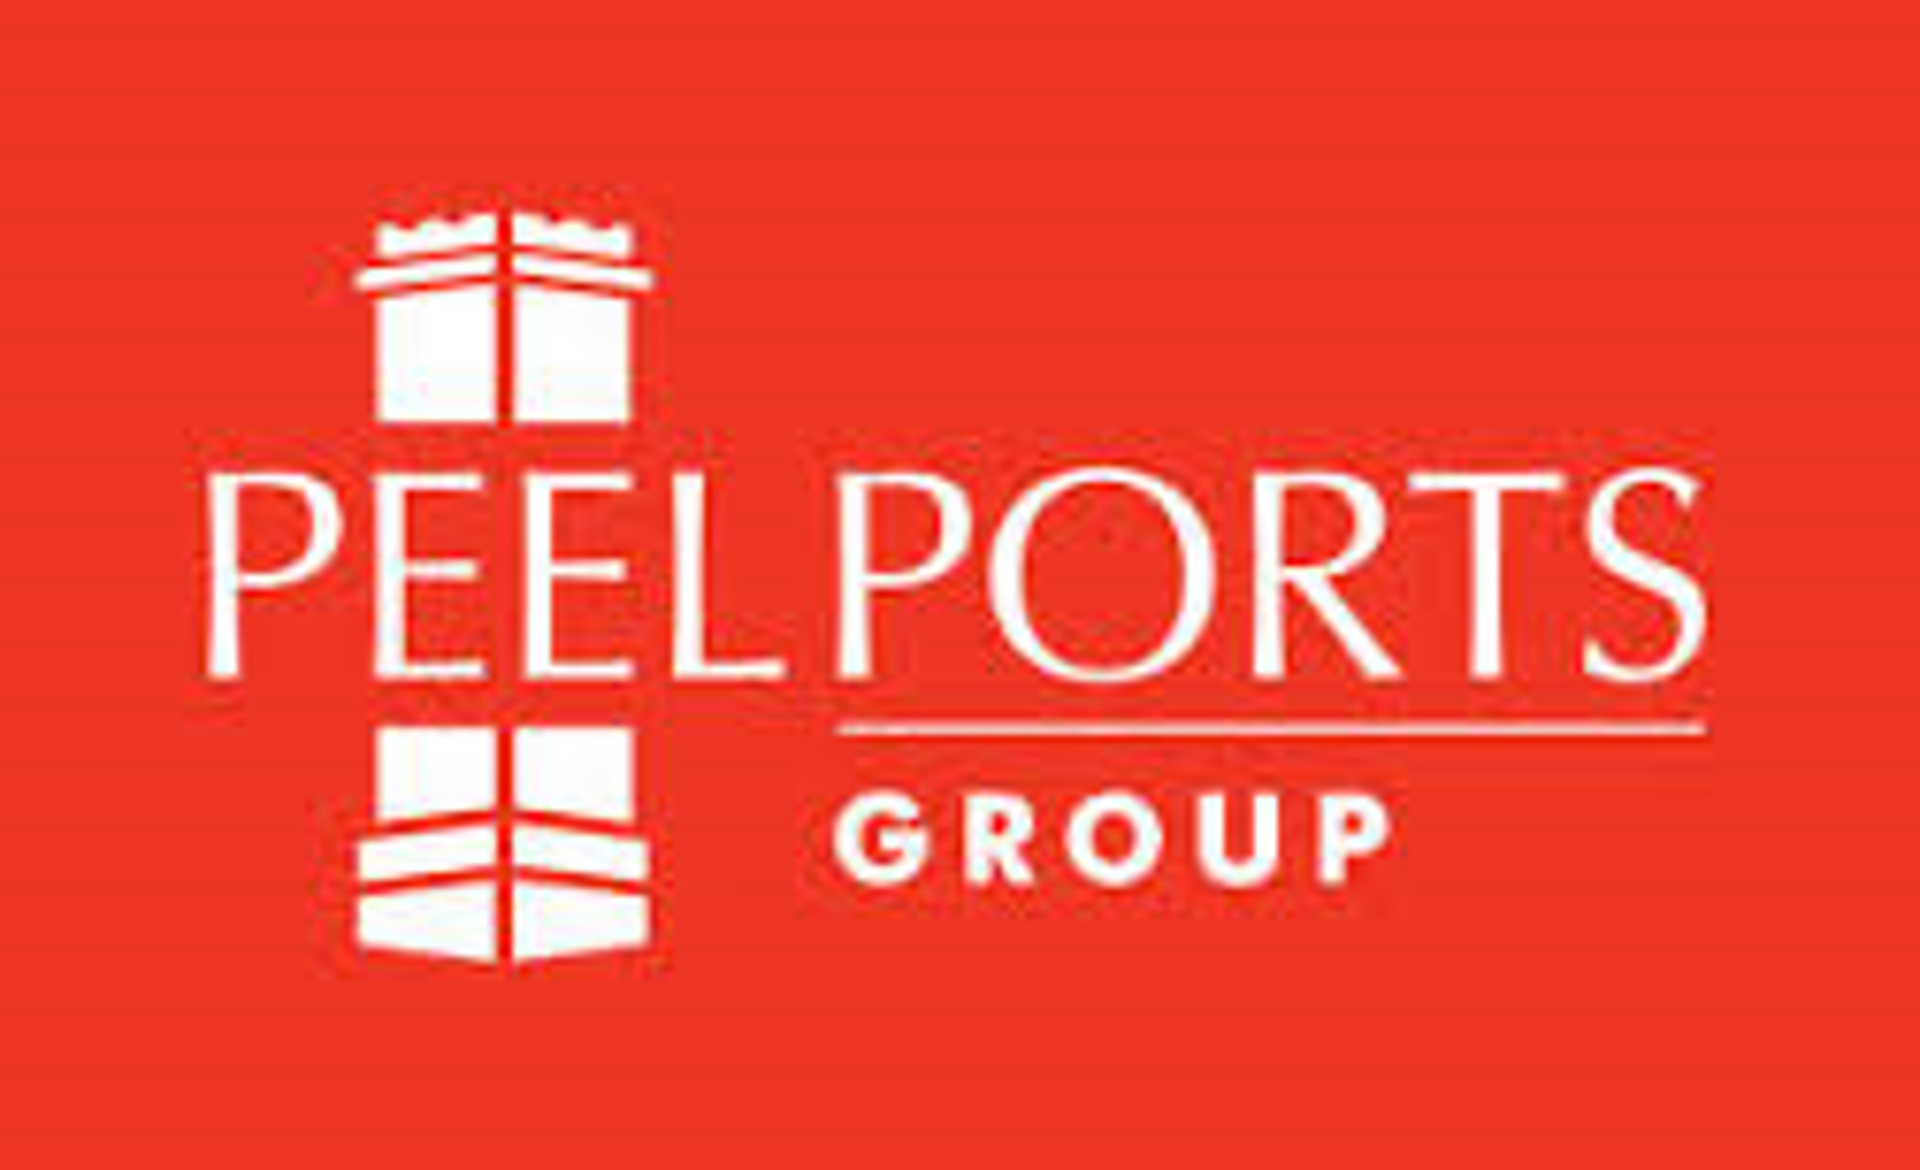 Peel Ports Group Logo